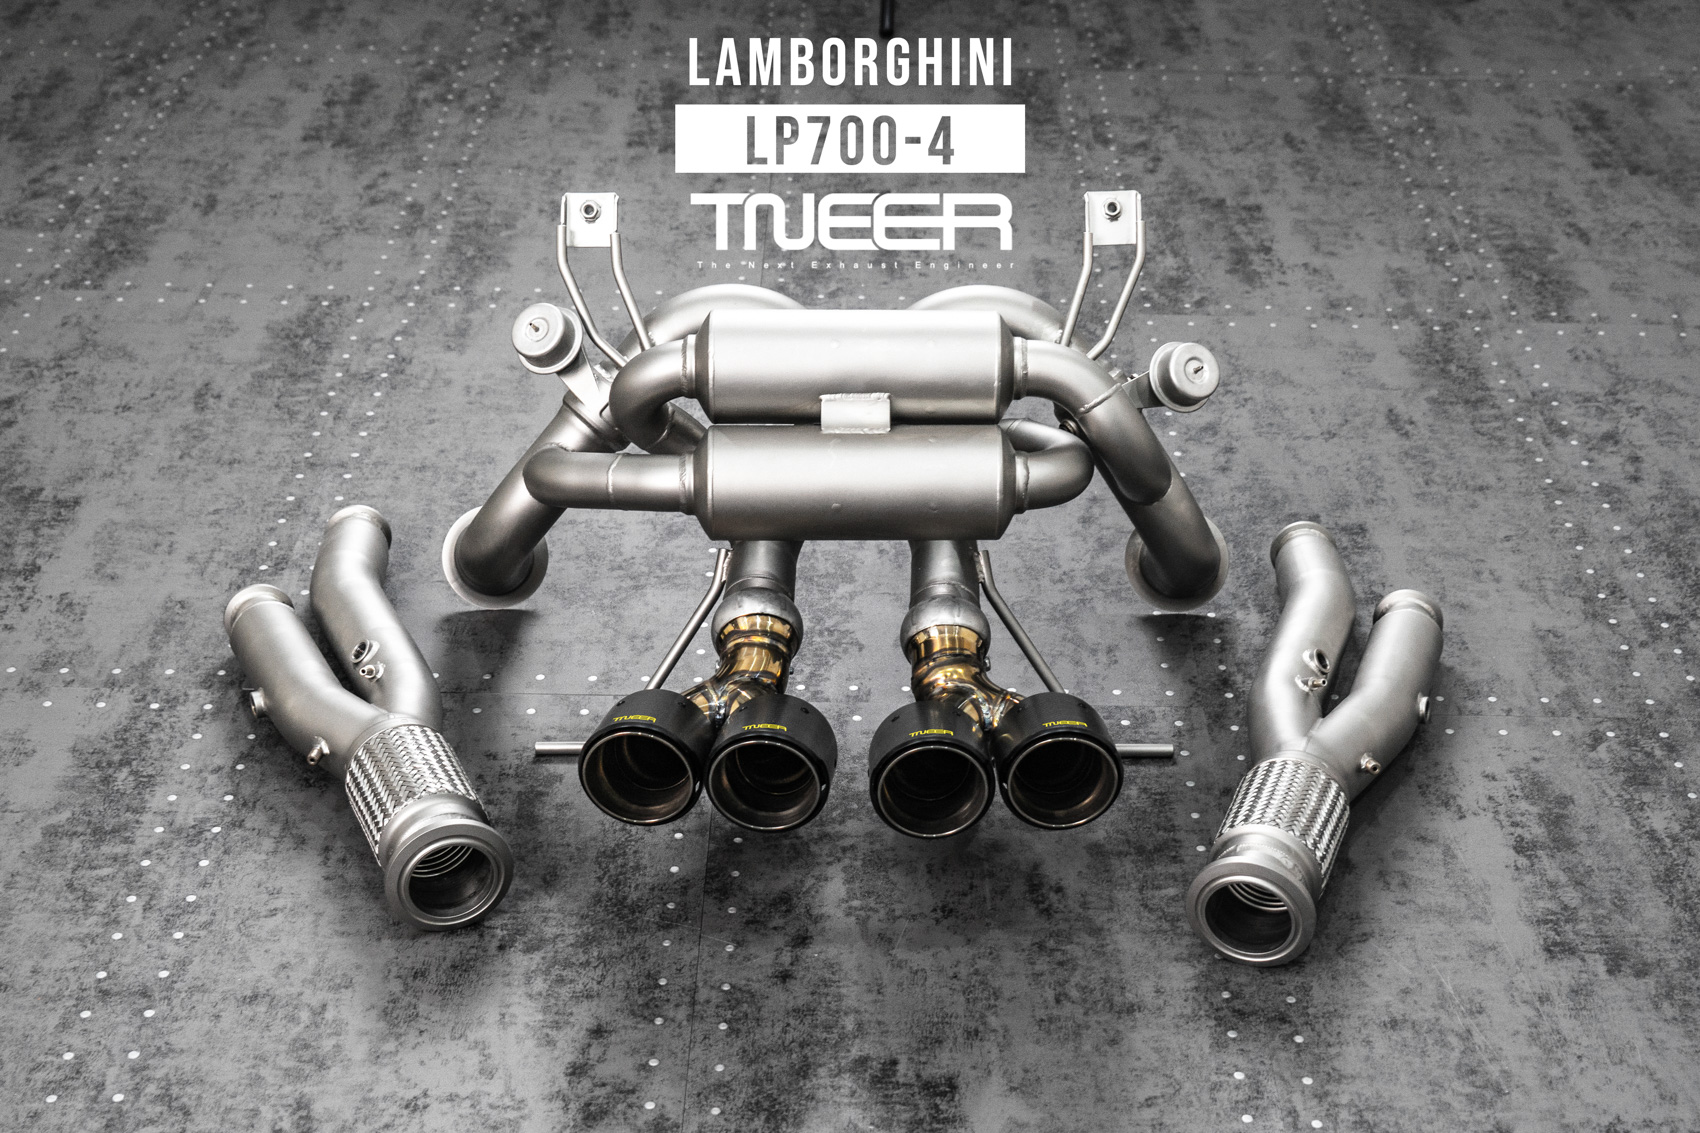 Lamborghini Aventador LP700-4/LP750-4 SV TNEER Performance Downpipes